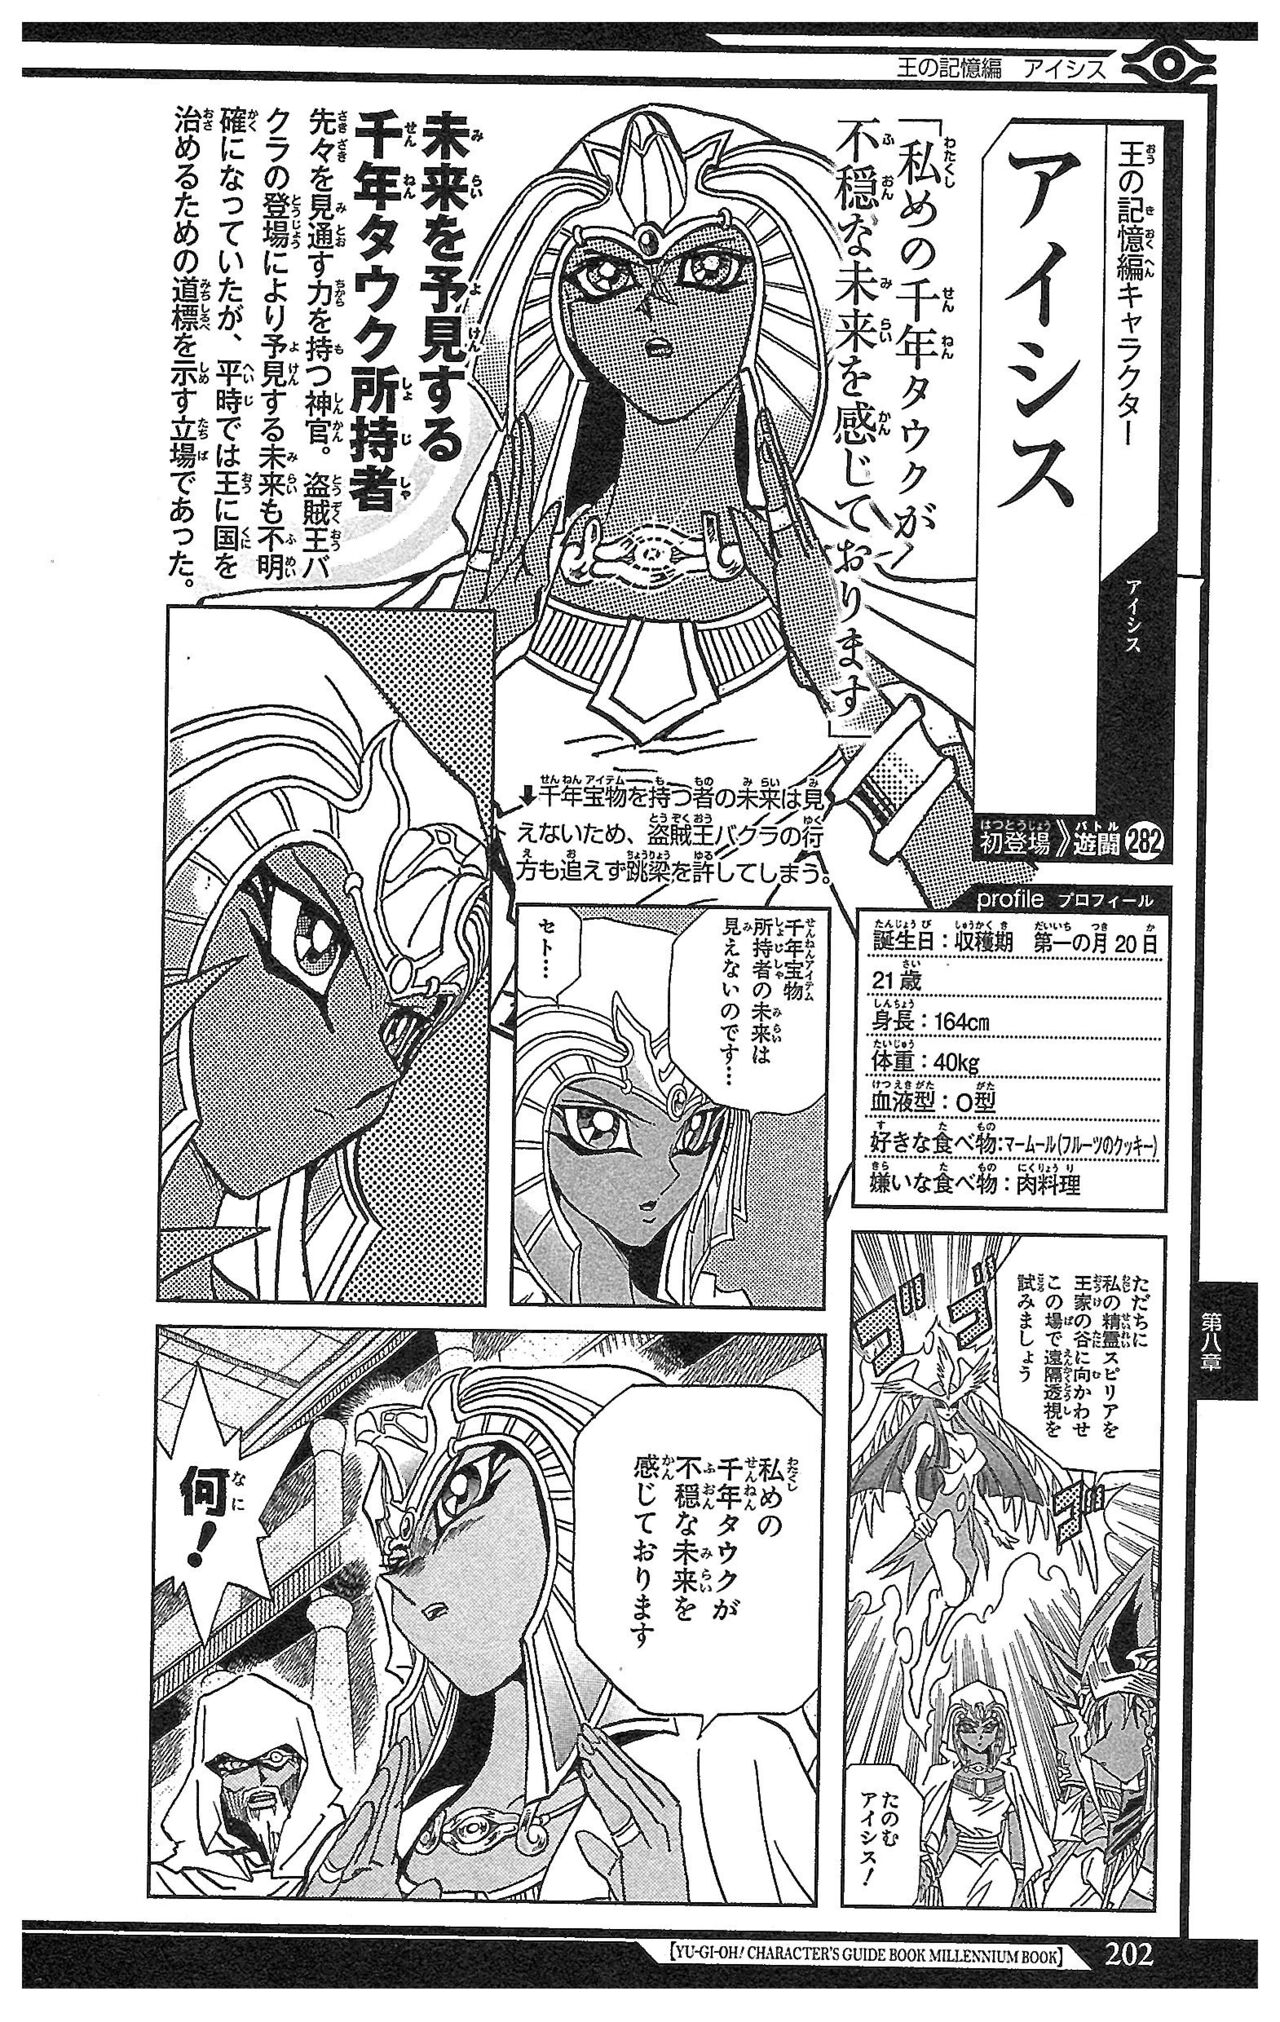 Yu-Gi-Oh! Character Guidebook: Millennium Book 198